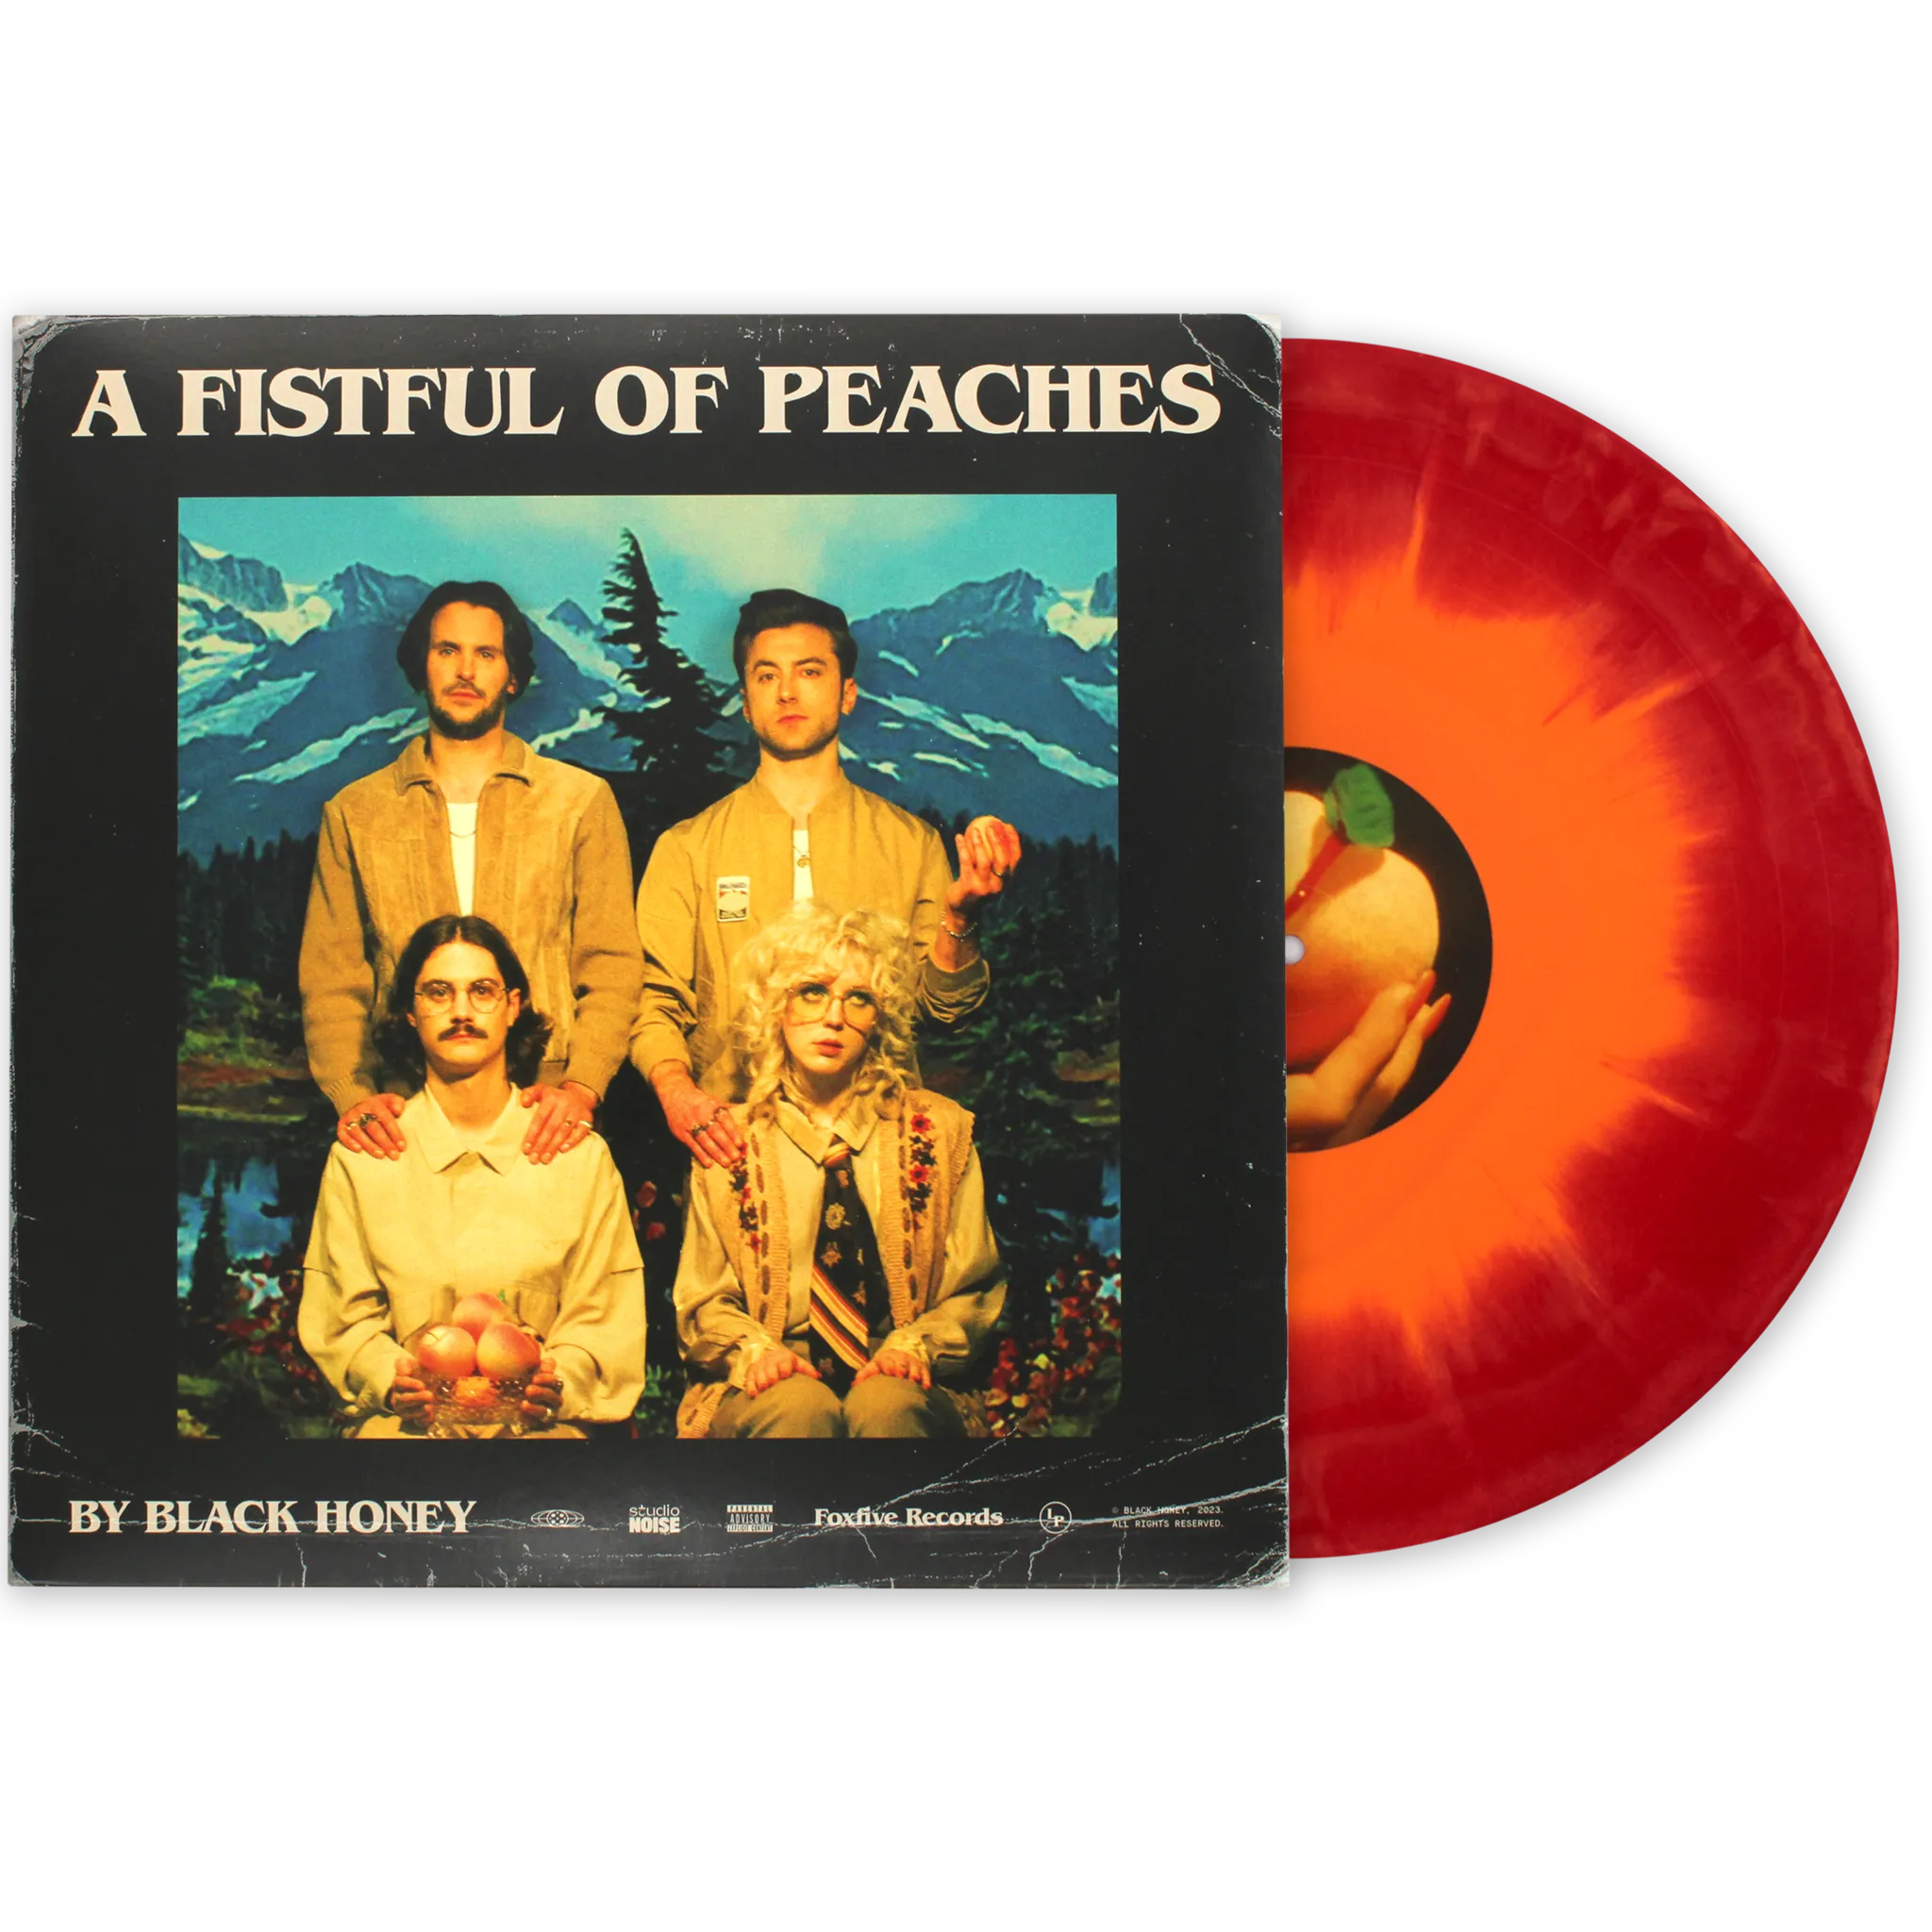 Album artwork for Album artwork for A Fistful of Peaches by Black Honey by A Fistful of Peaches - Black Honey